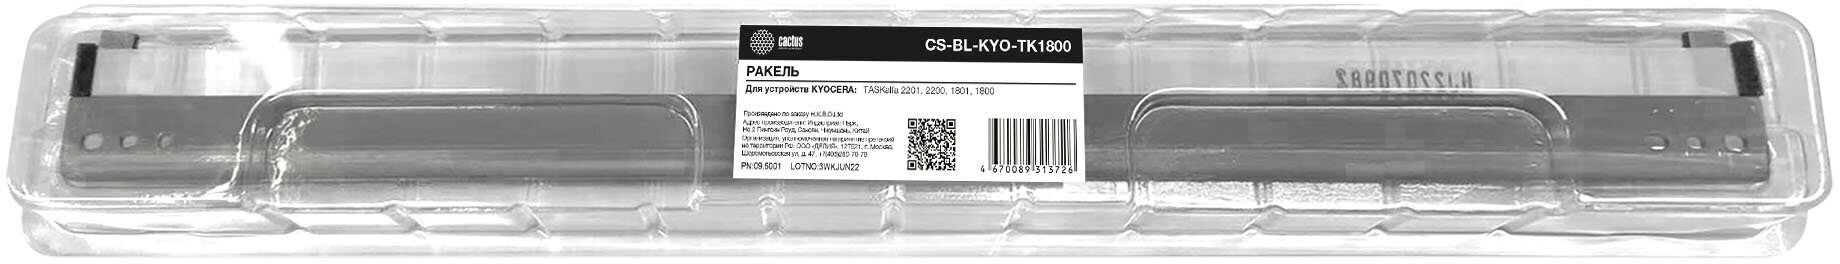 Ракель Cactus CS-BL-KYO-TK1800 (MK4105) для Kyocera TASKalfa 2201, 2200, 1801, 1800